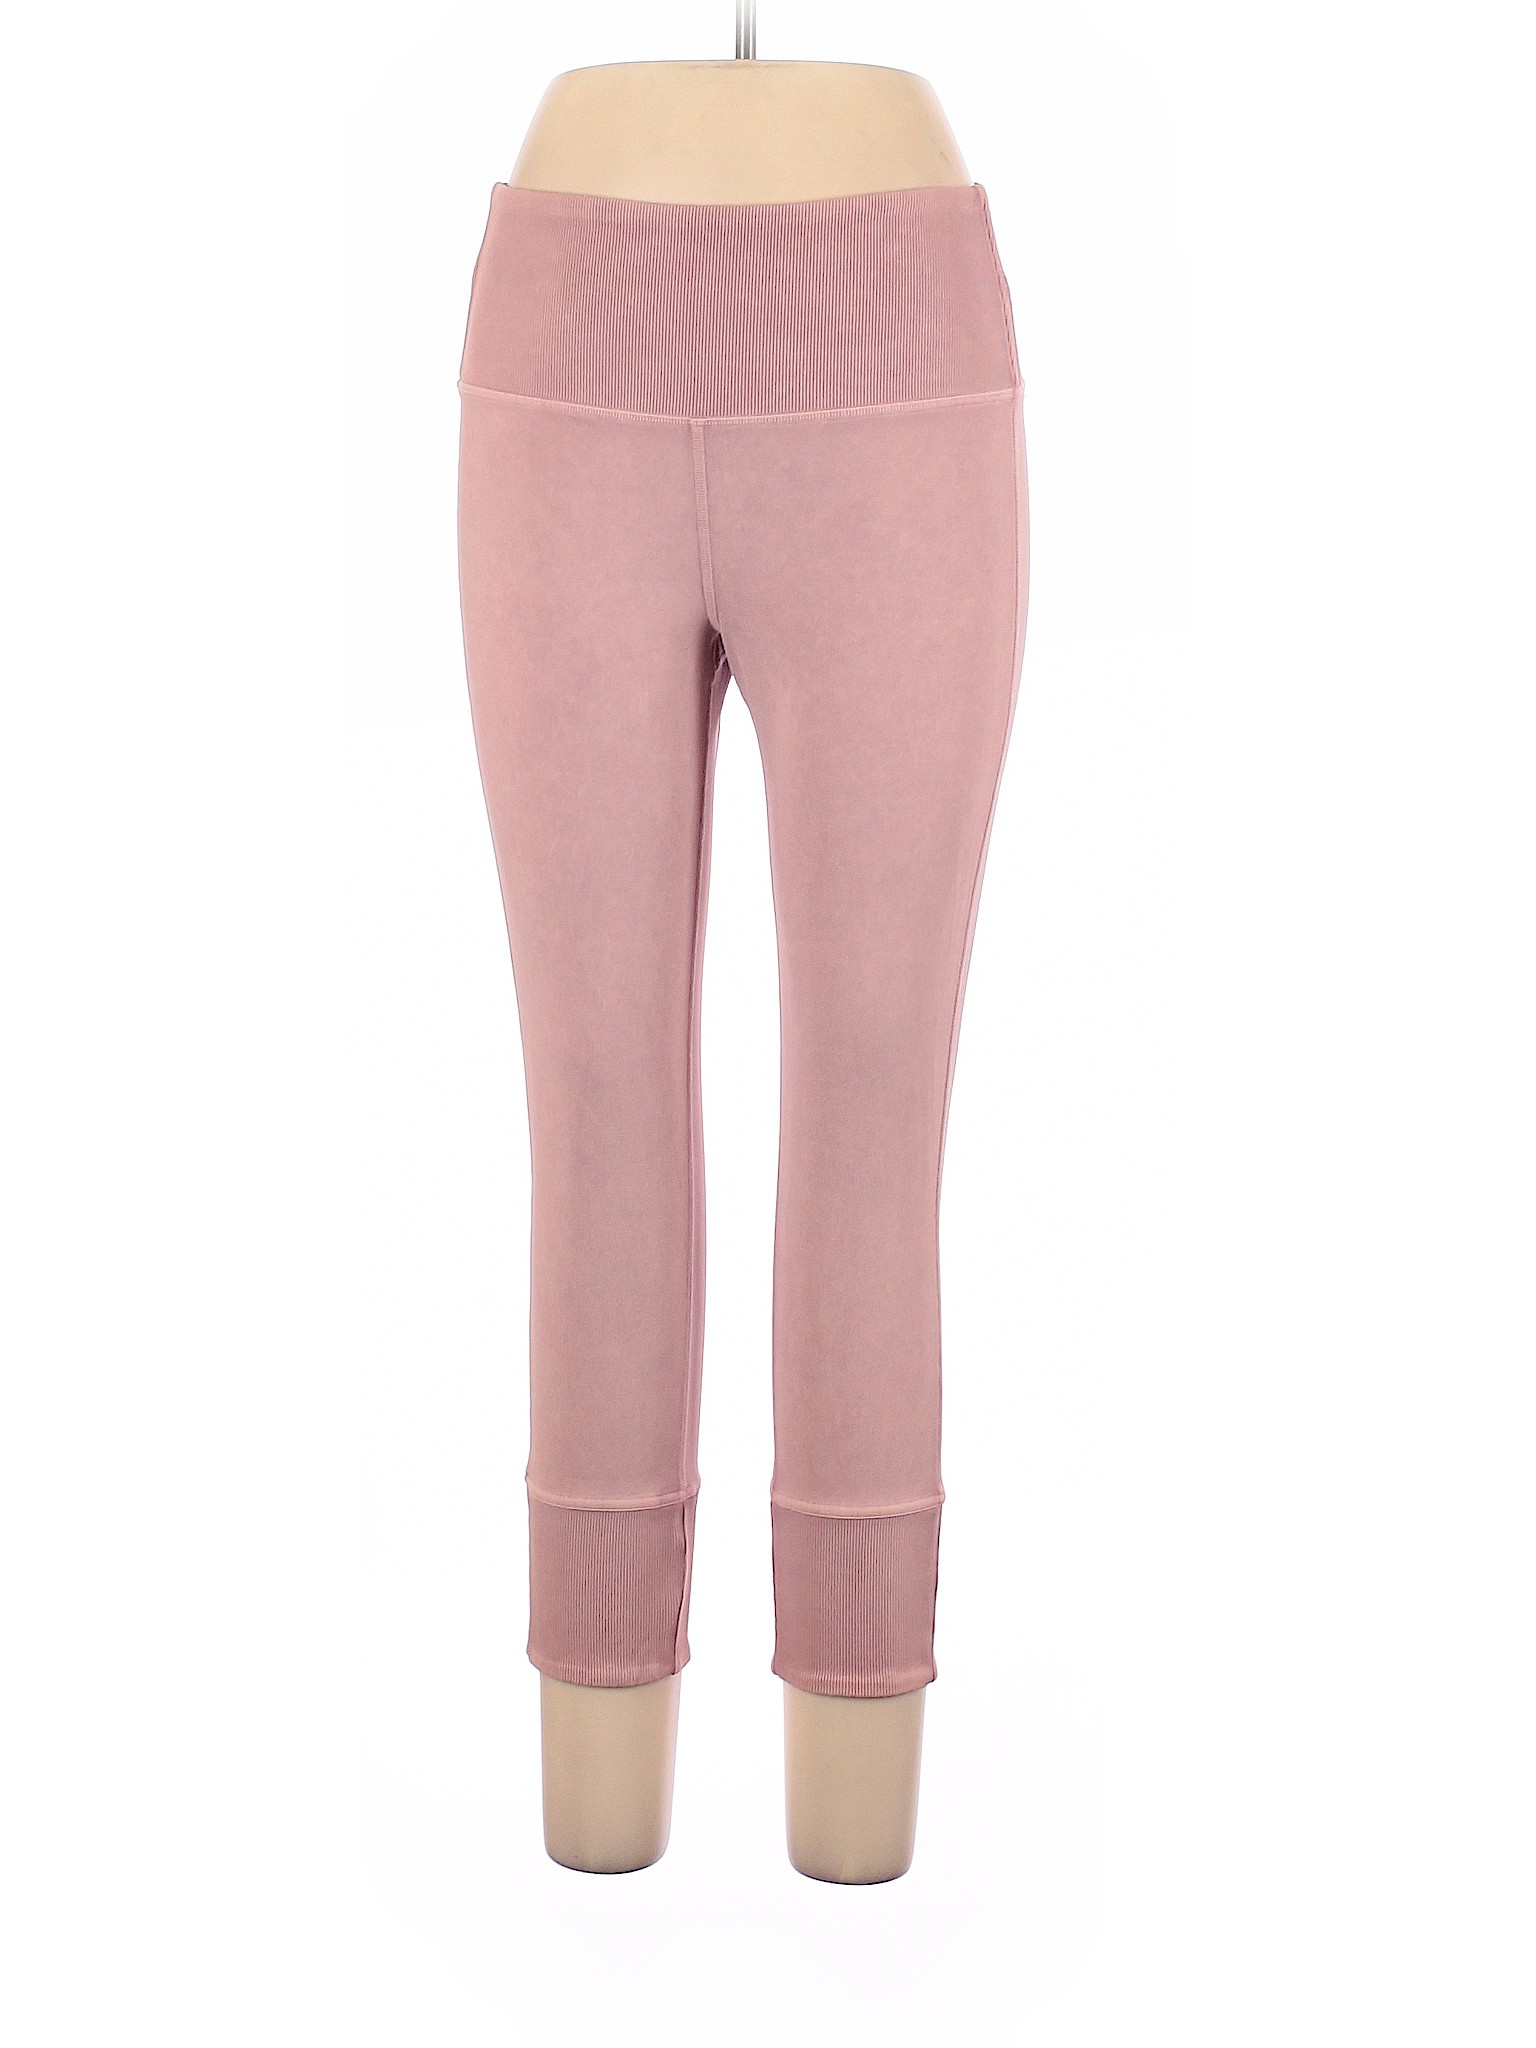 Lululemon Athletica Solid Pink Active Pants Size 10 - 40% off | thredUP